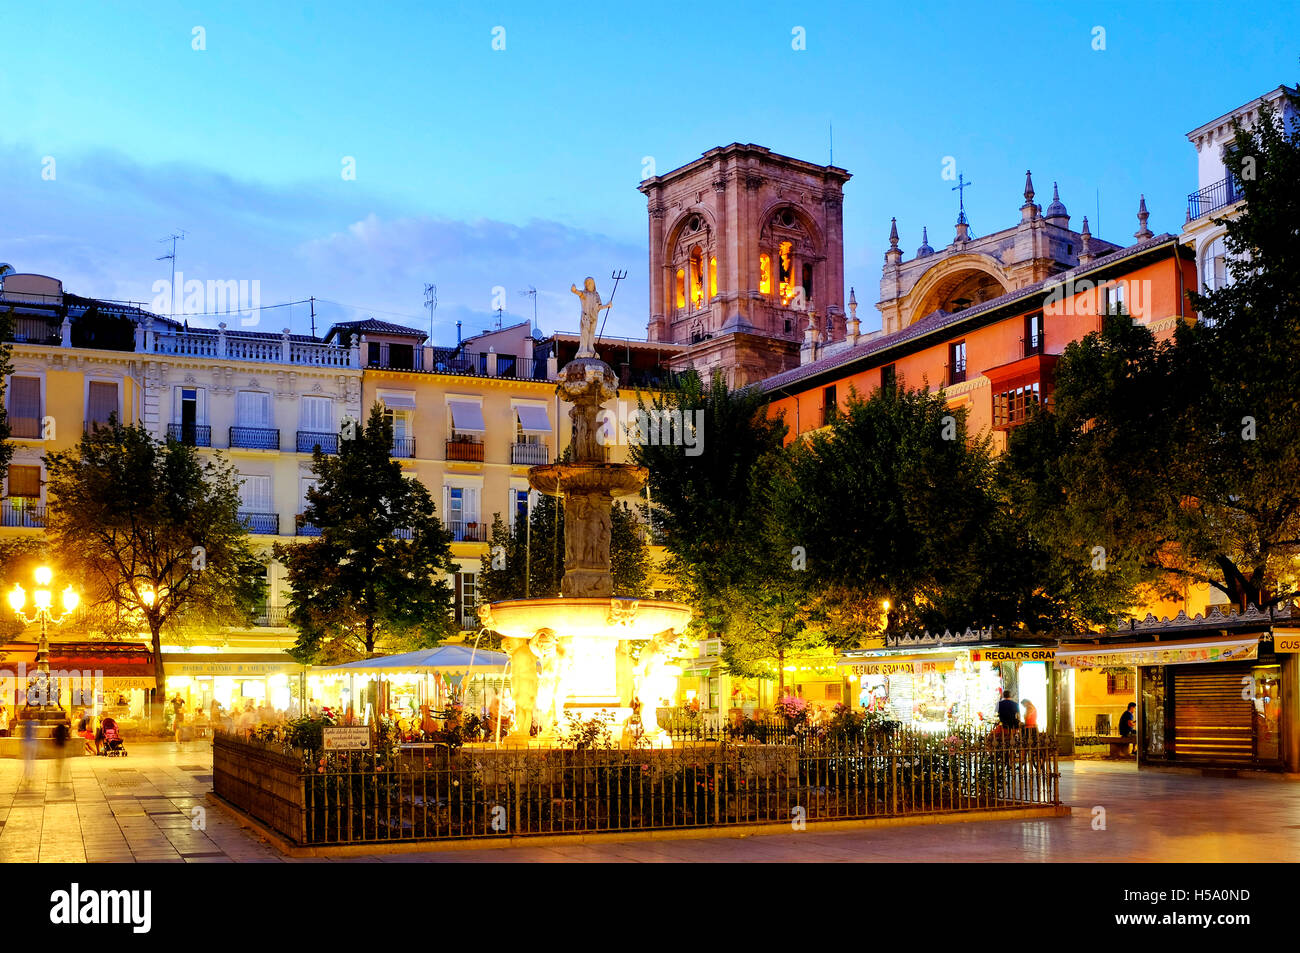 Plaza Bib-Rambla, Granada, Spain Stock Photo - Alamy